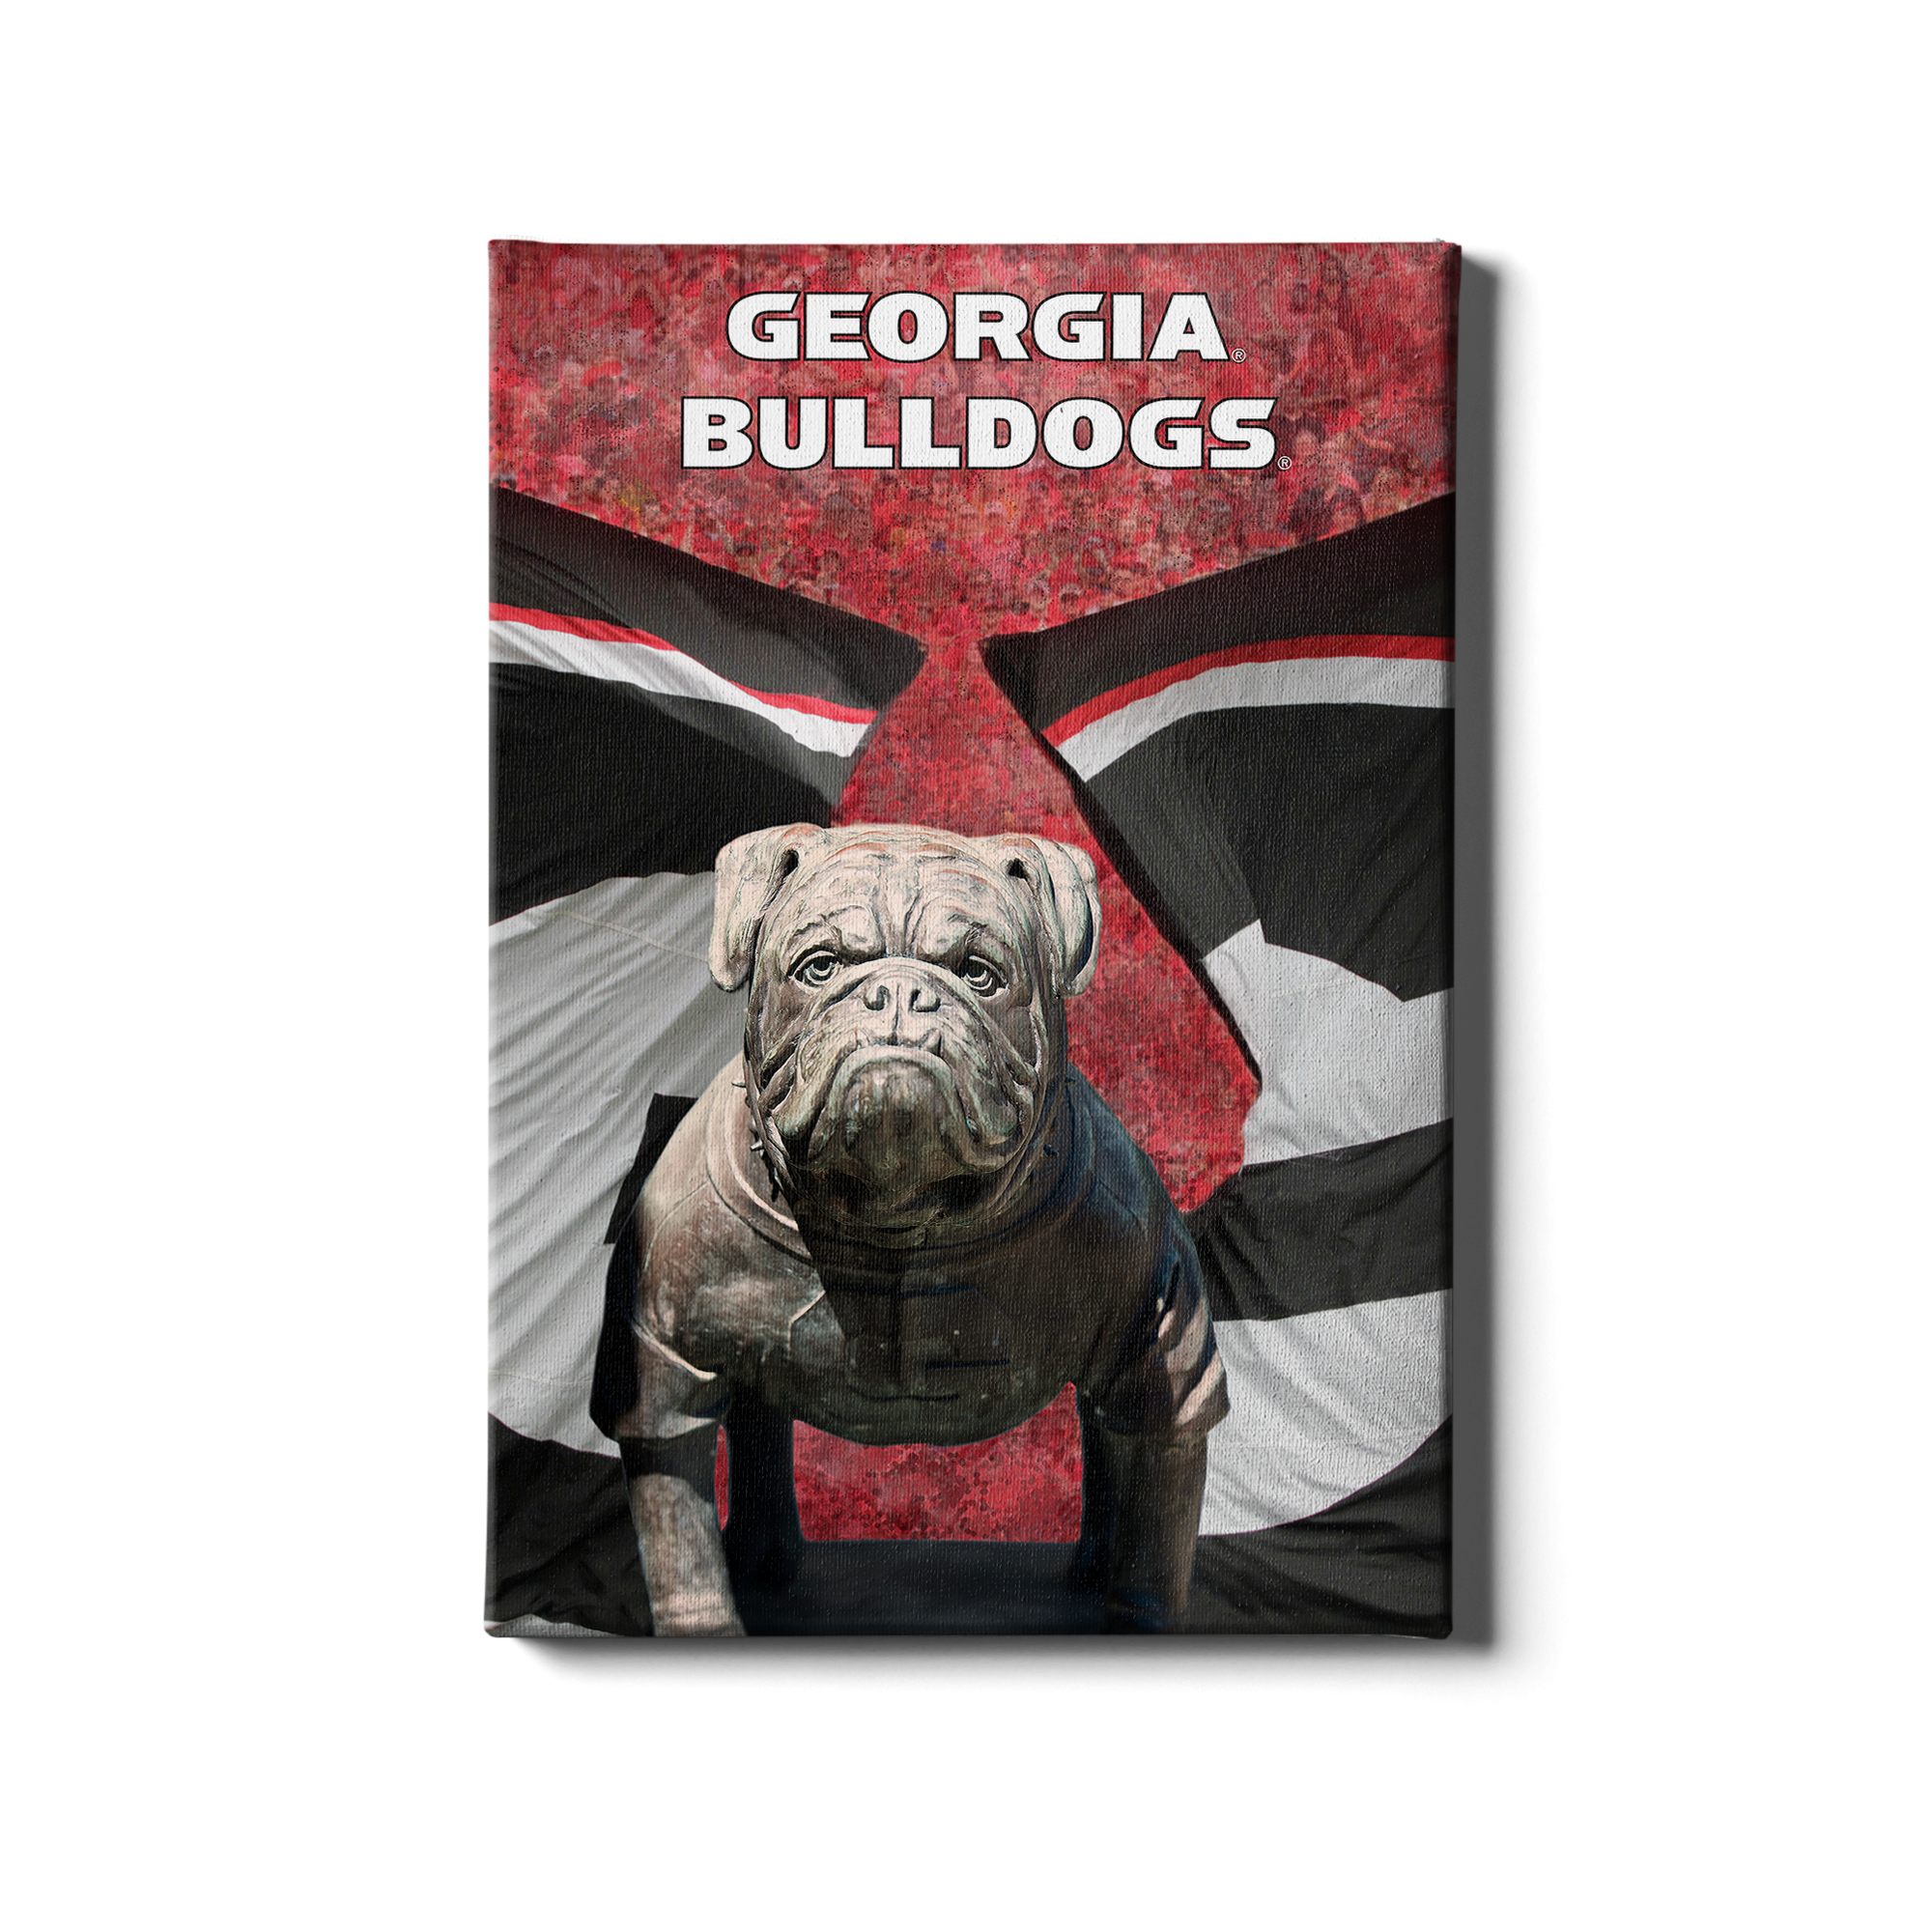 Georgia Bulldogs - Georgia Bulldogs - College Wall Art #Canvas